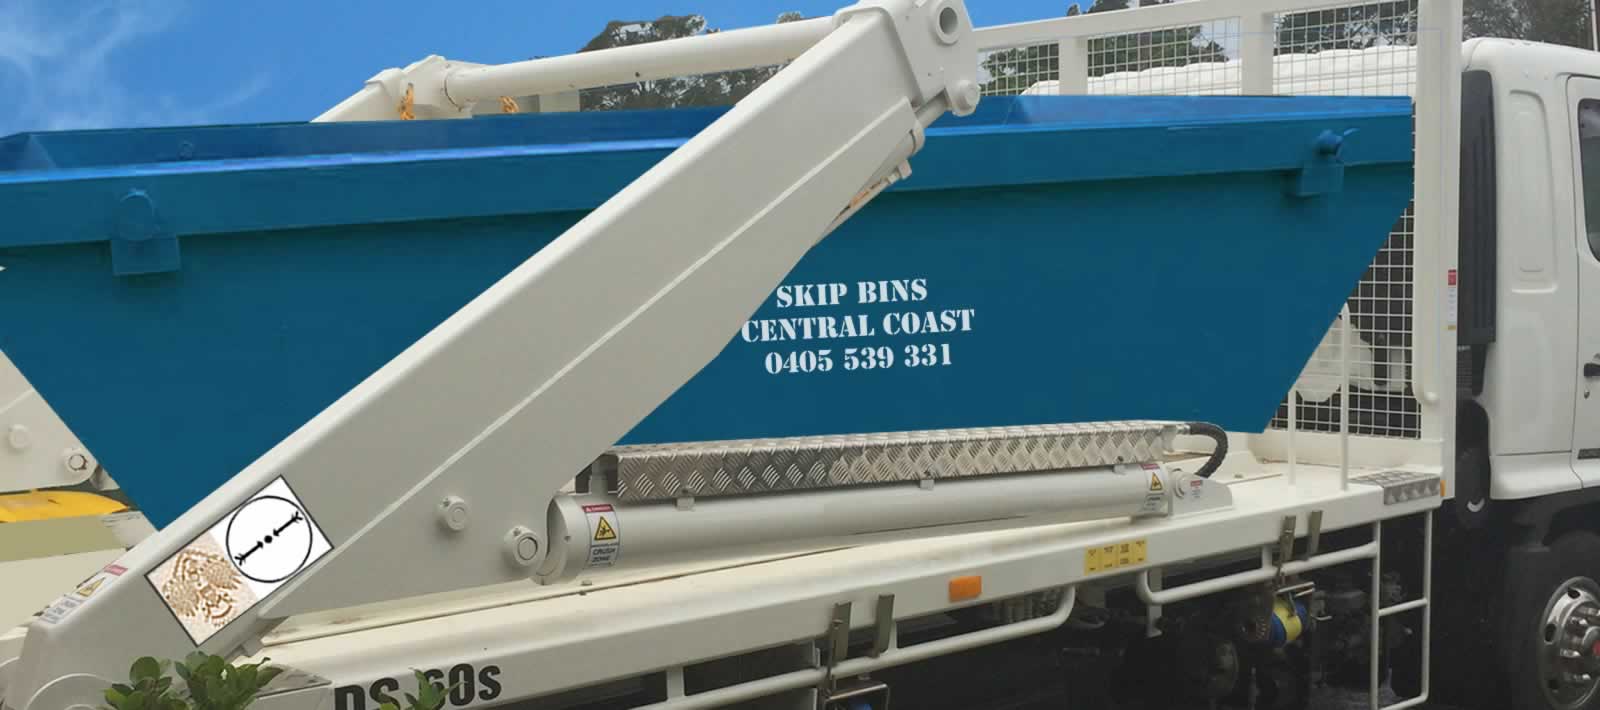 Skip Bins Central Coast. Open during COVID